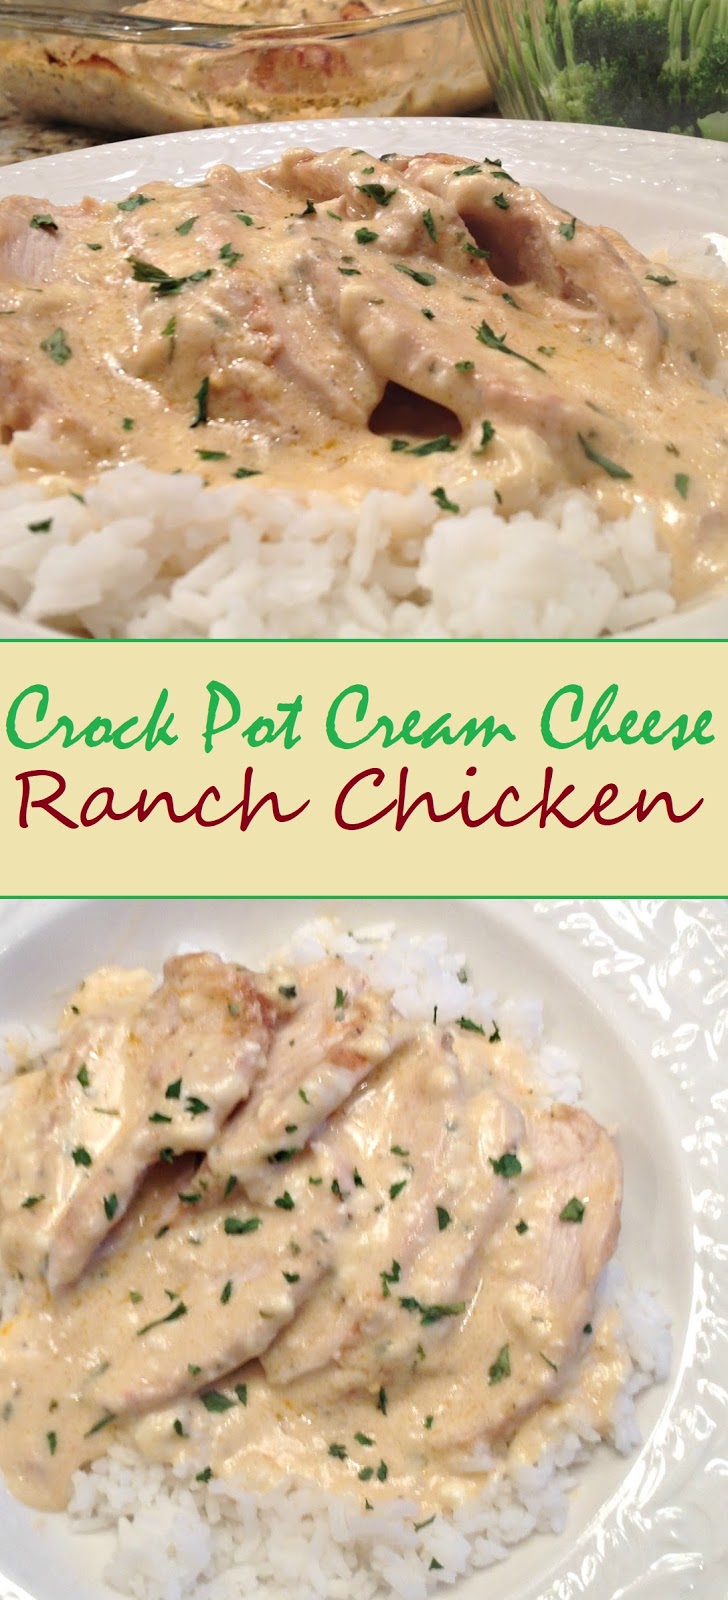 Crock Pot Cream Cheese Ranch Chicken - Healthy